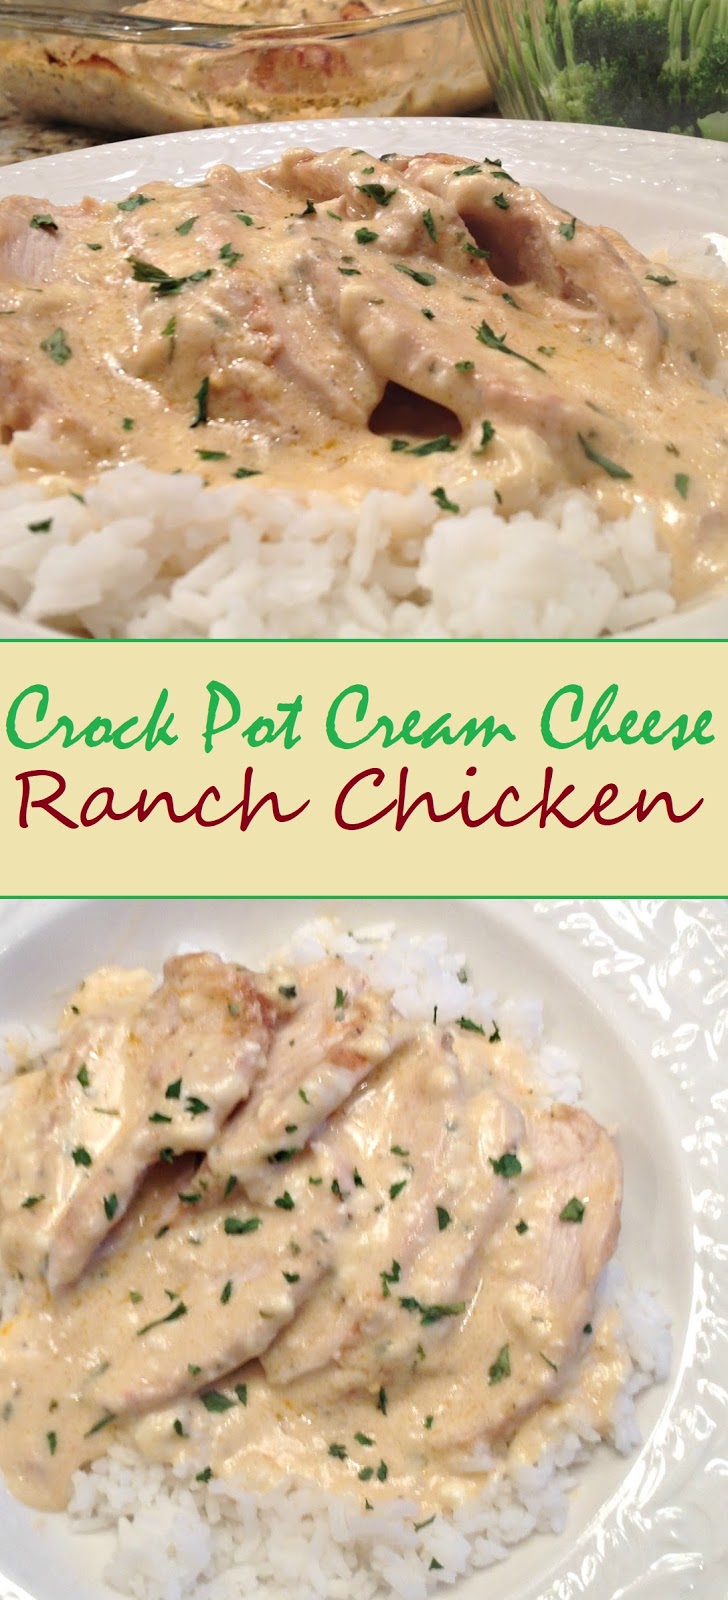 Crock Pot Cream Cheese Ranch Chicken - Healthy